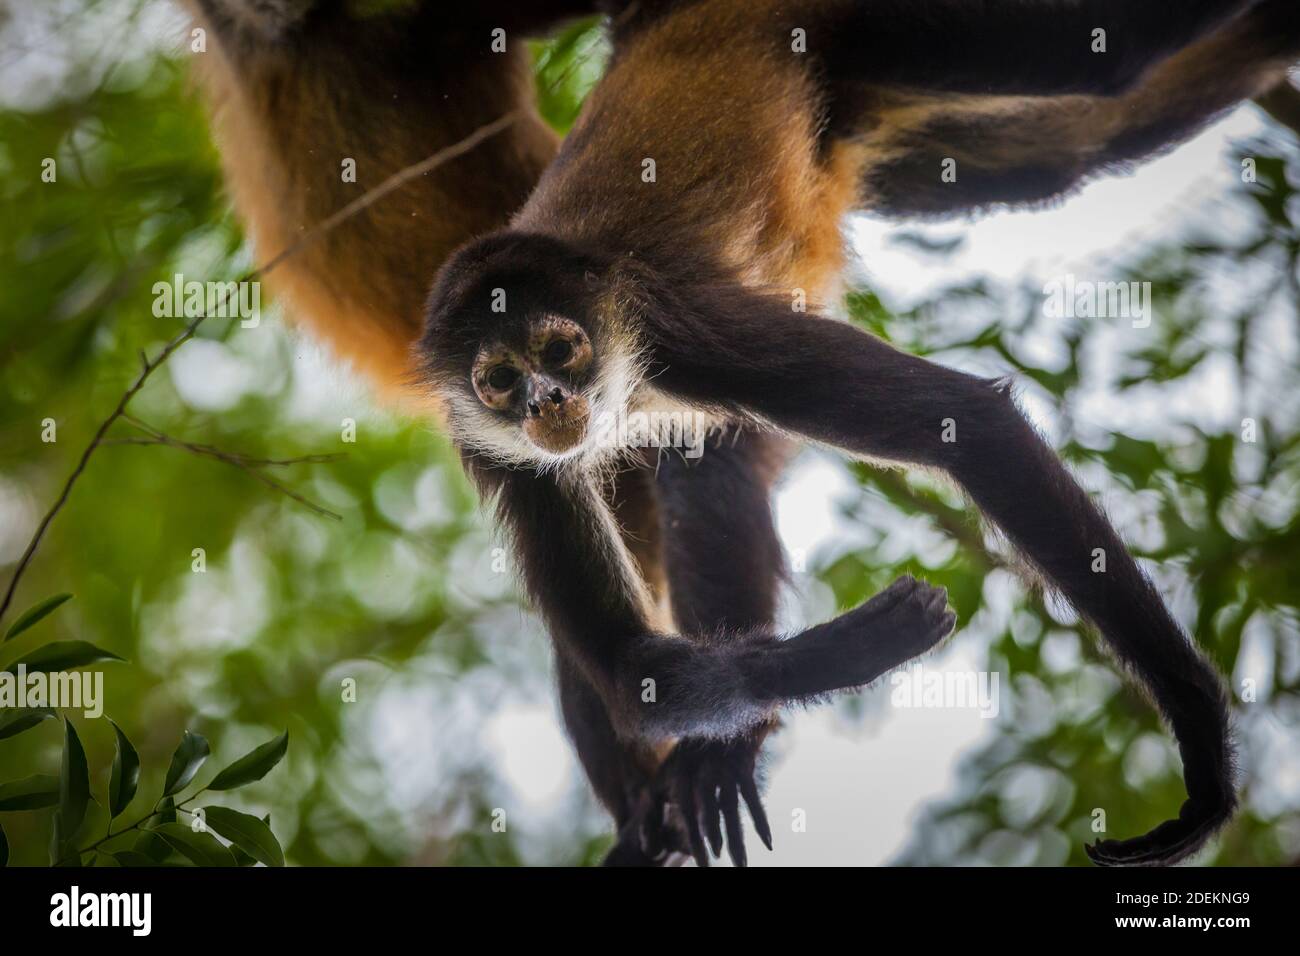 Azuero Spider Monkey, Ateles geoffroyi azuerensis, inside the dense rainforest of Cerro Hoya national park, Veraguas province, Republic of Panama. Stock Photo